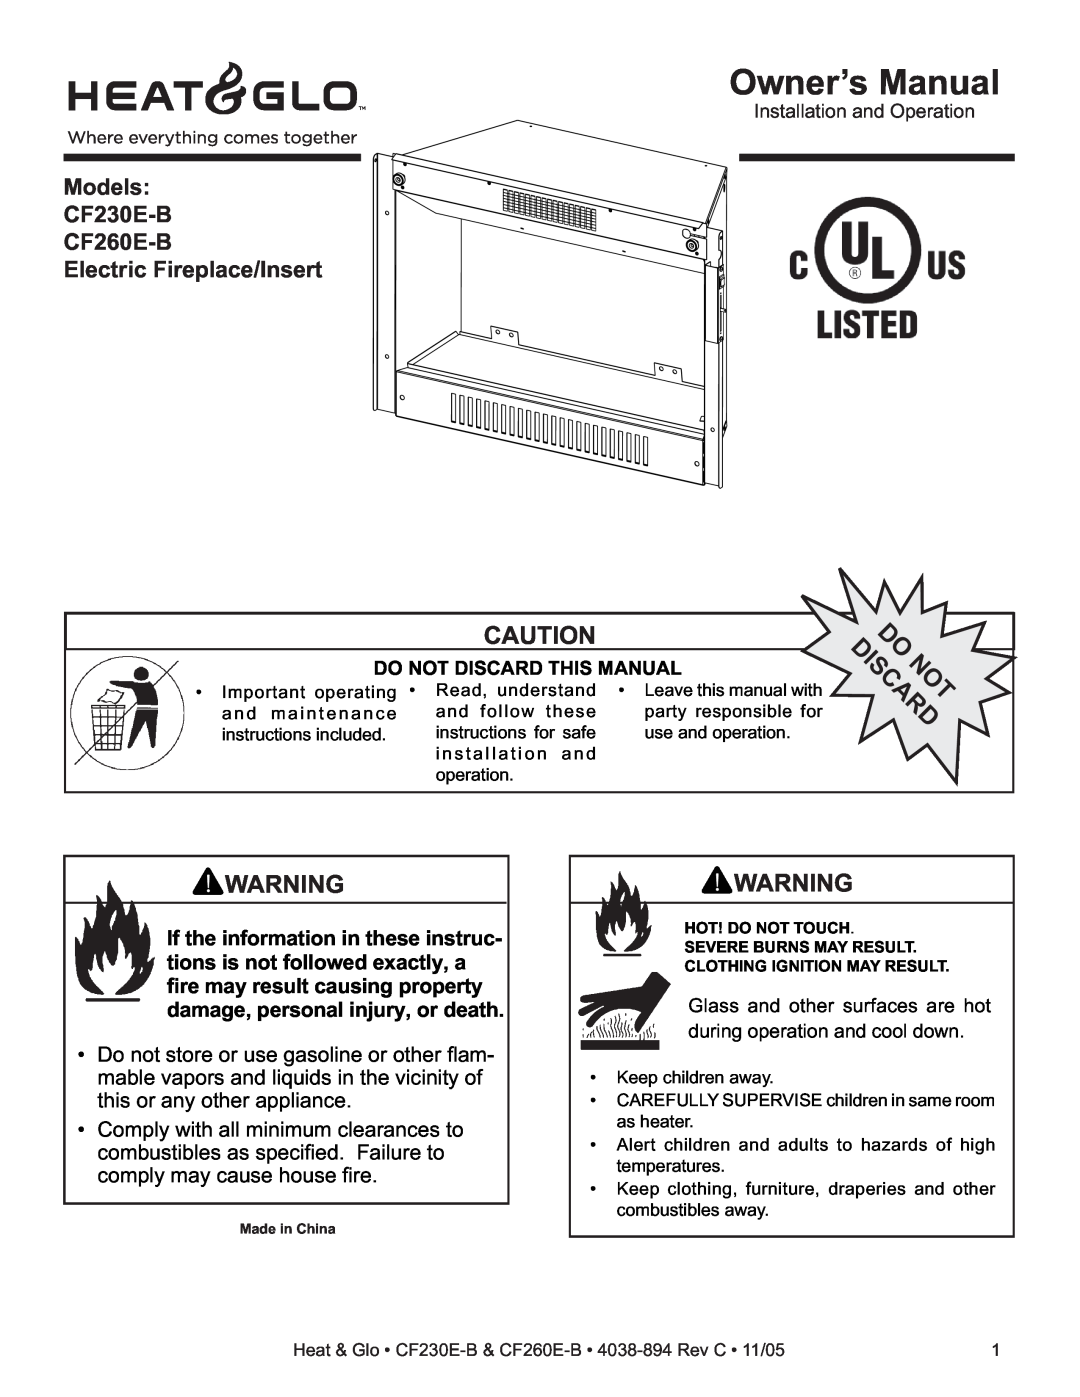 Heat & Glo LifeStyle owner manual Models CF230E-B CF260E-B, Electric Fireplace/Insert 